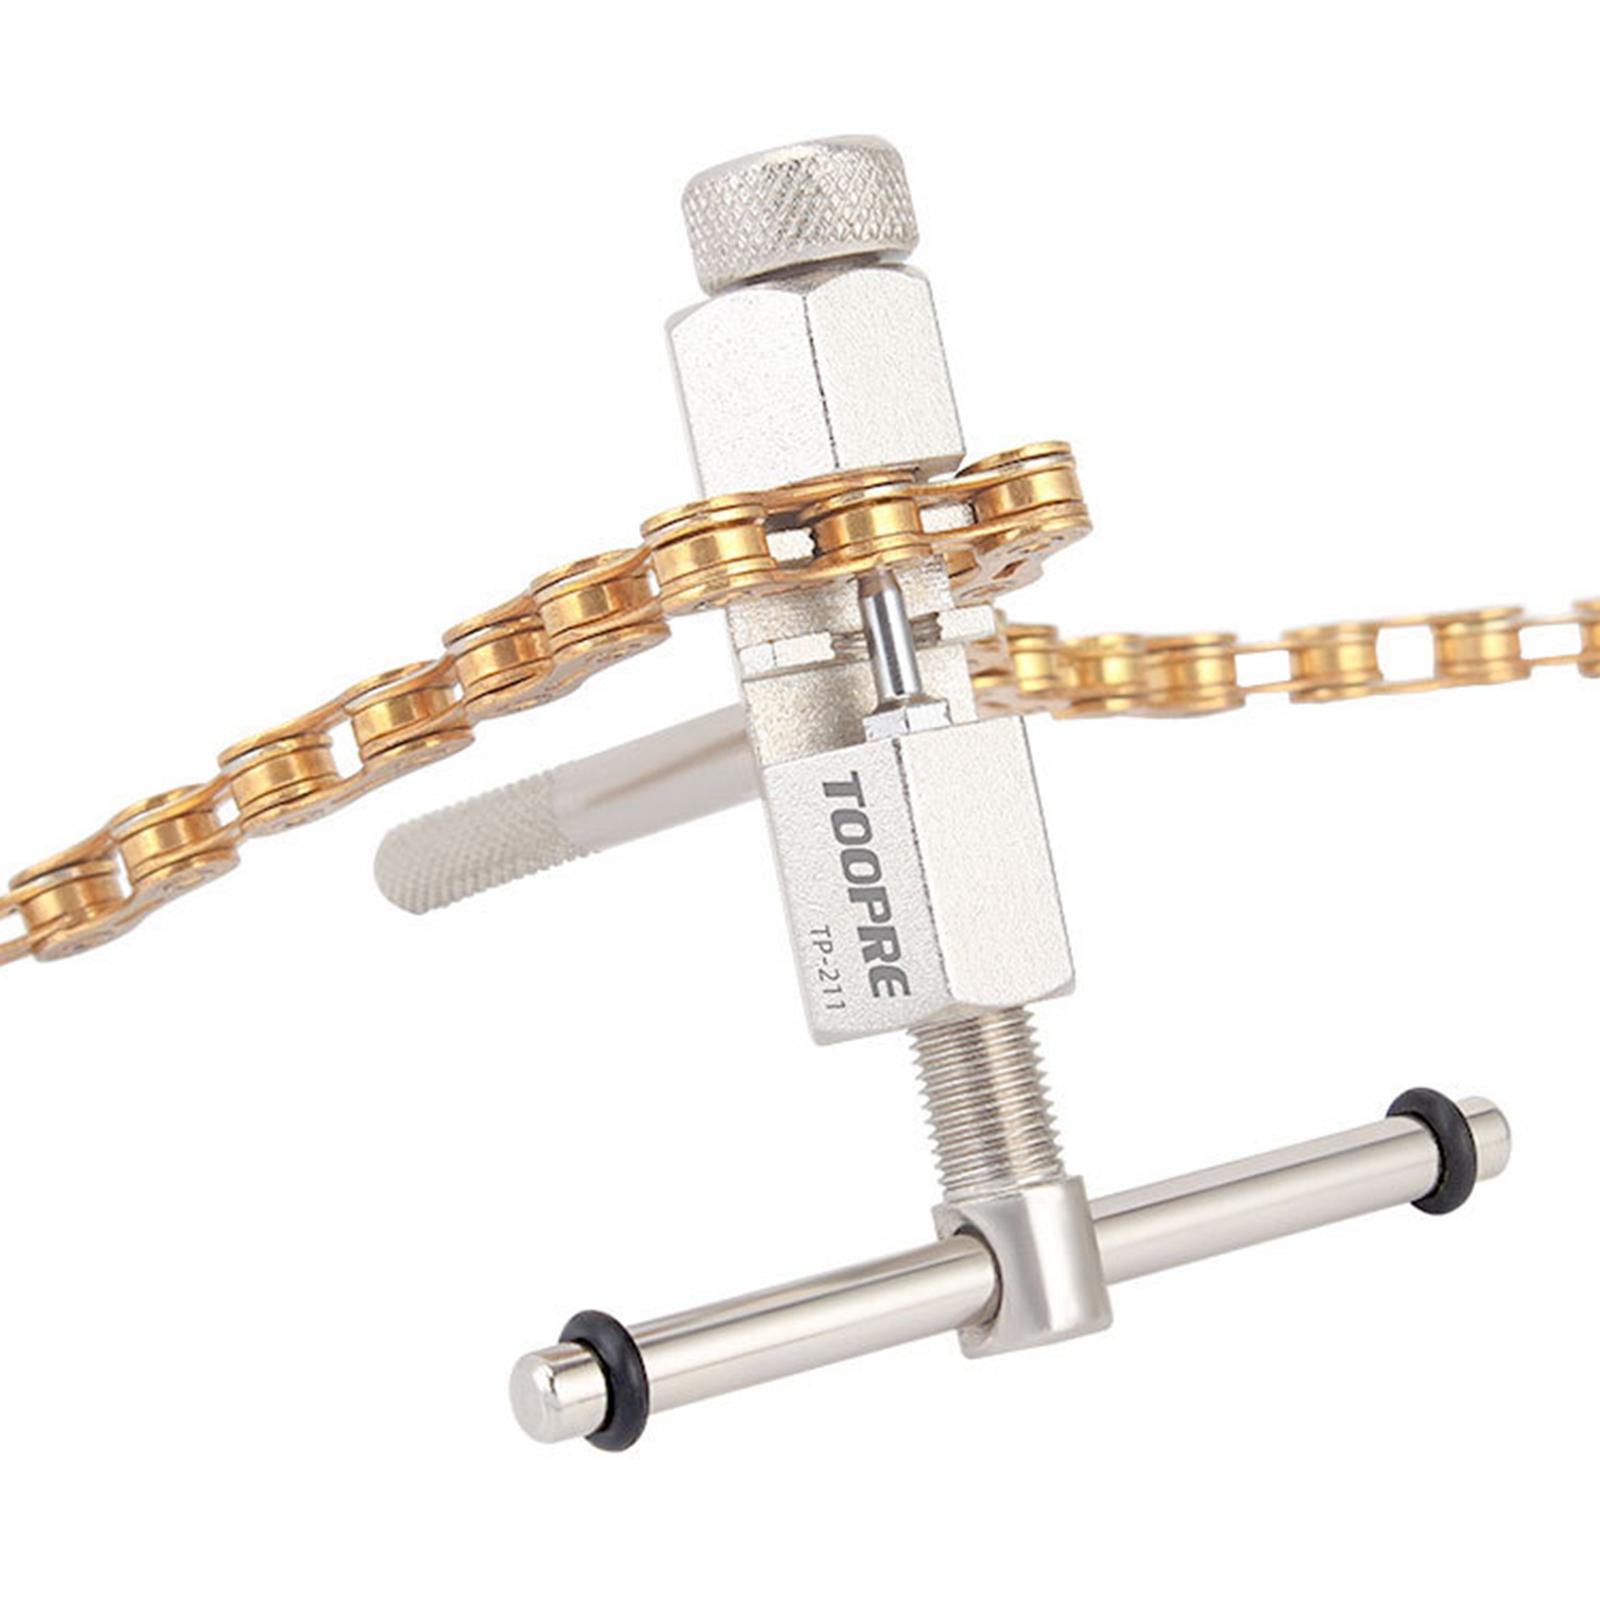 Durable Bike Chain Cutter Breaker Tool Remover Cycling Bike Chain Splitter